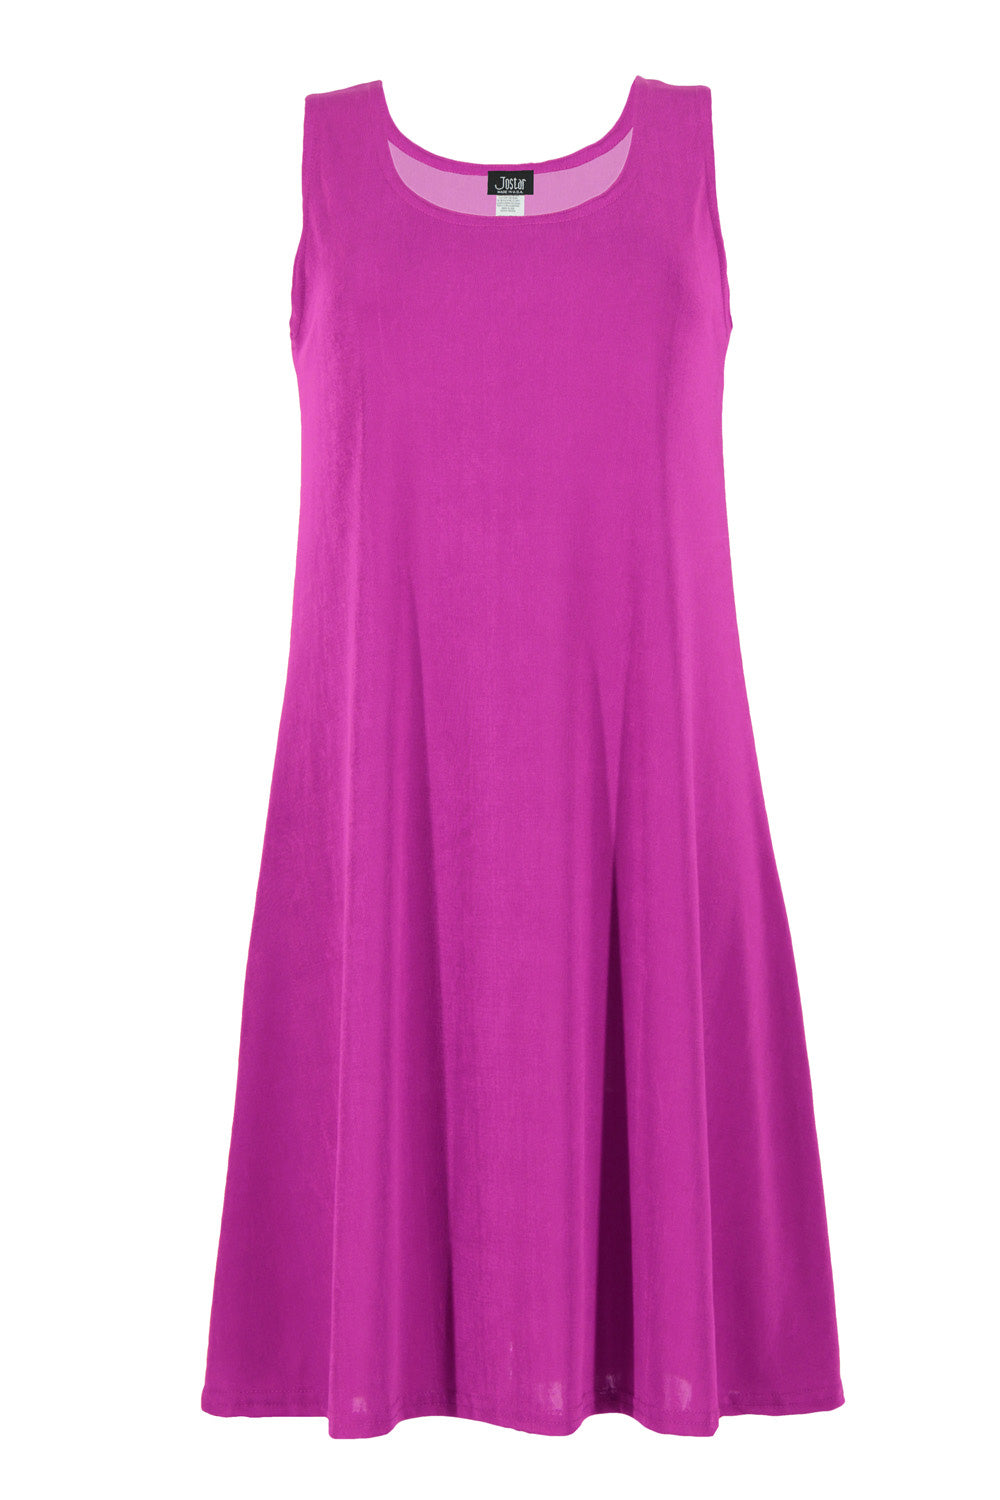 Classic Stretch Short Sleeveless Dress-7003BN-TRS1 - Jostar Online